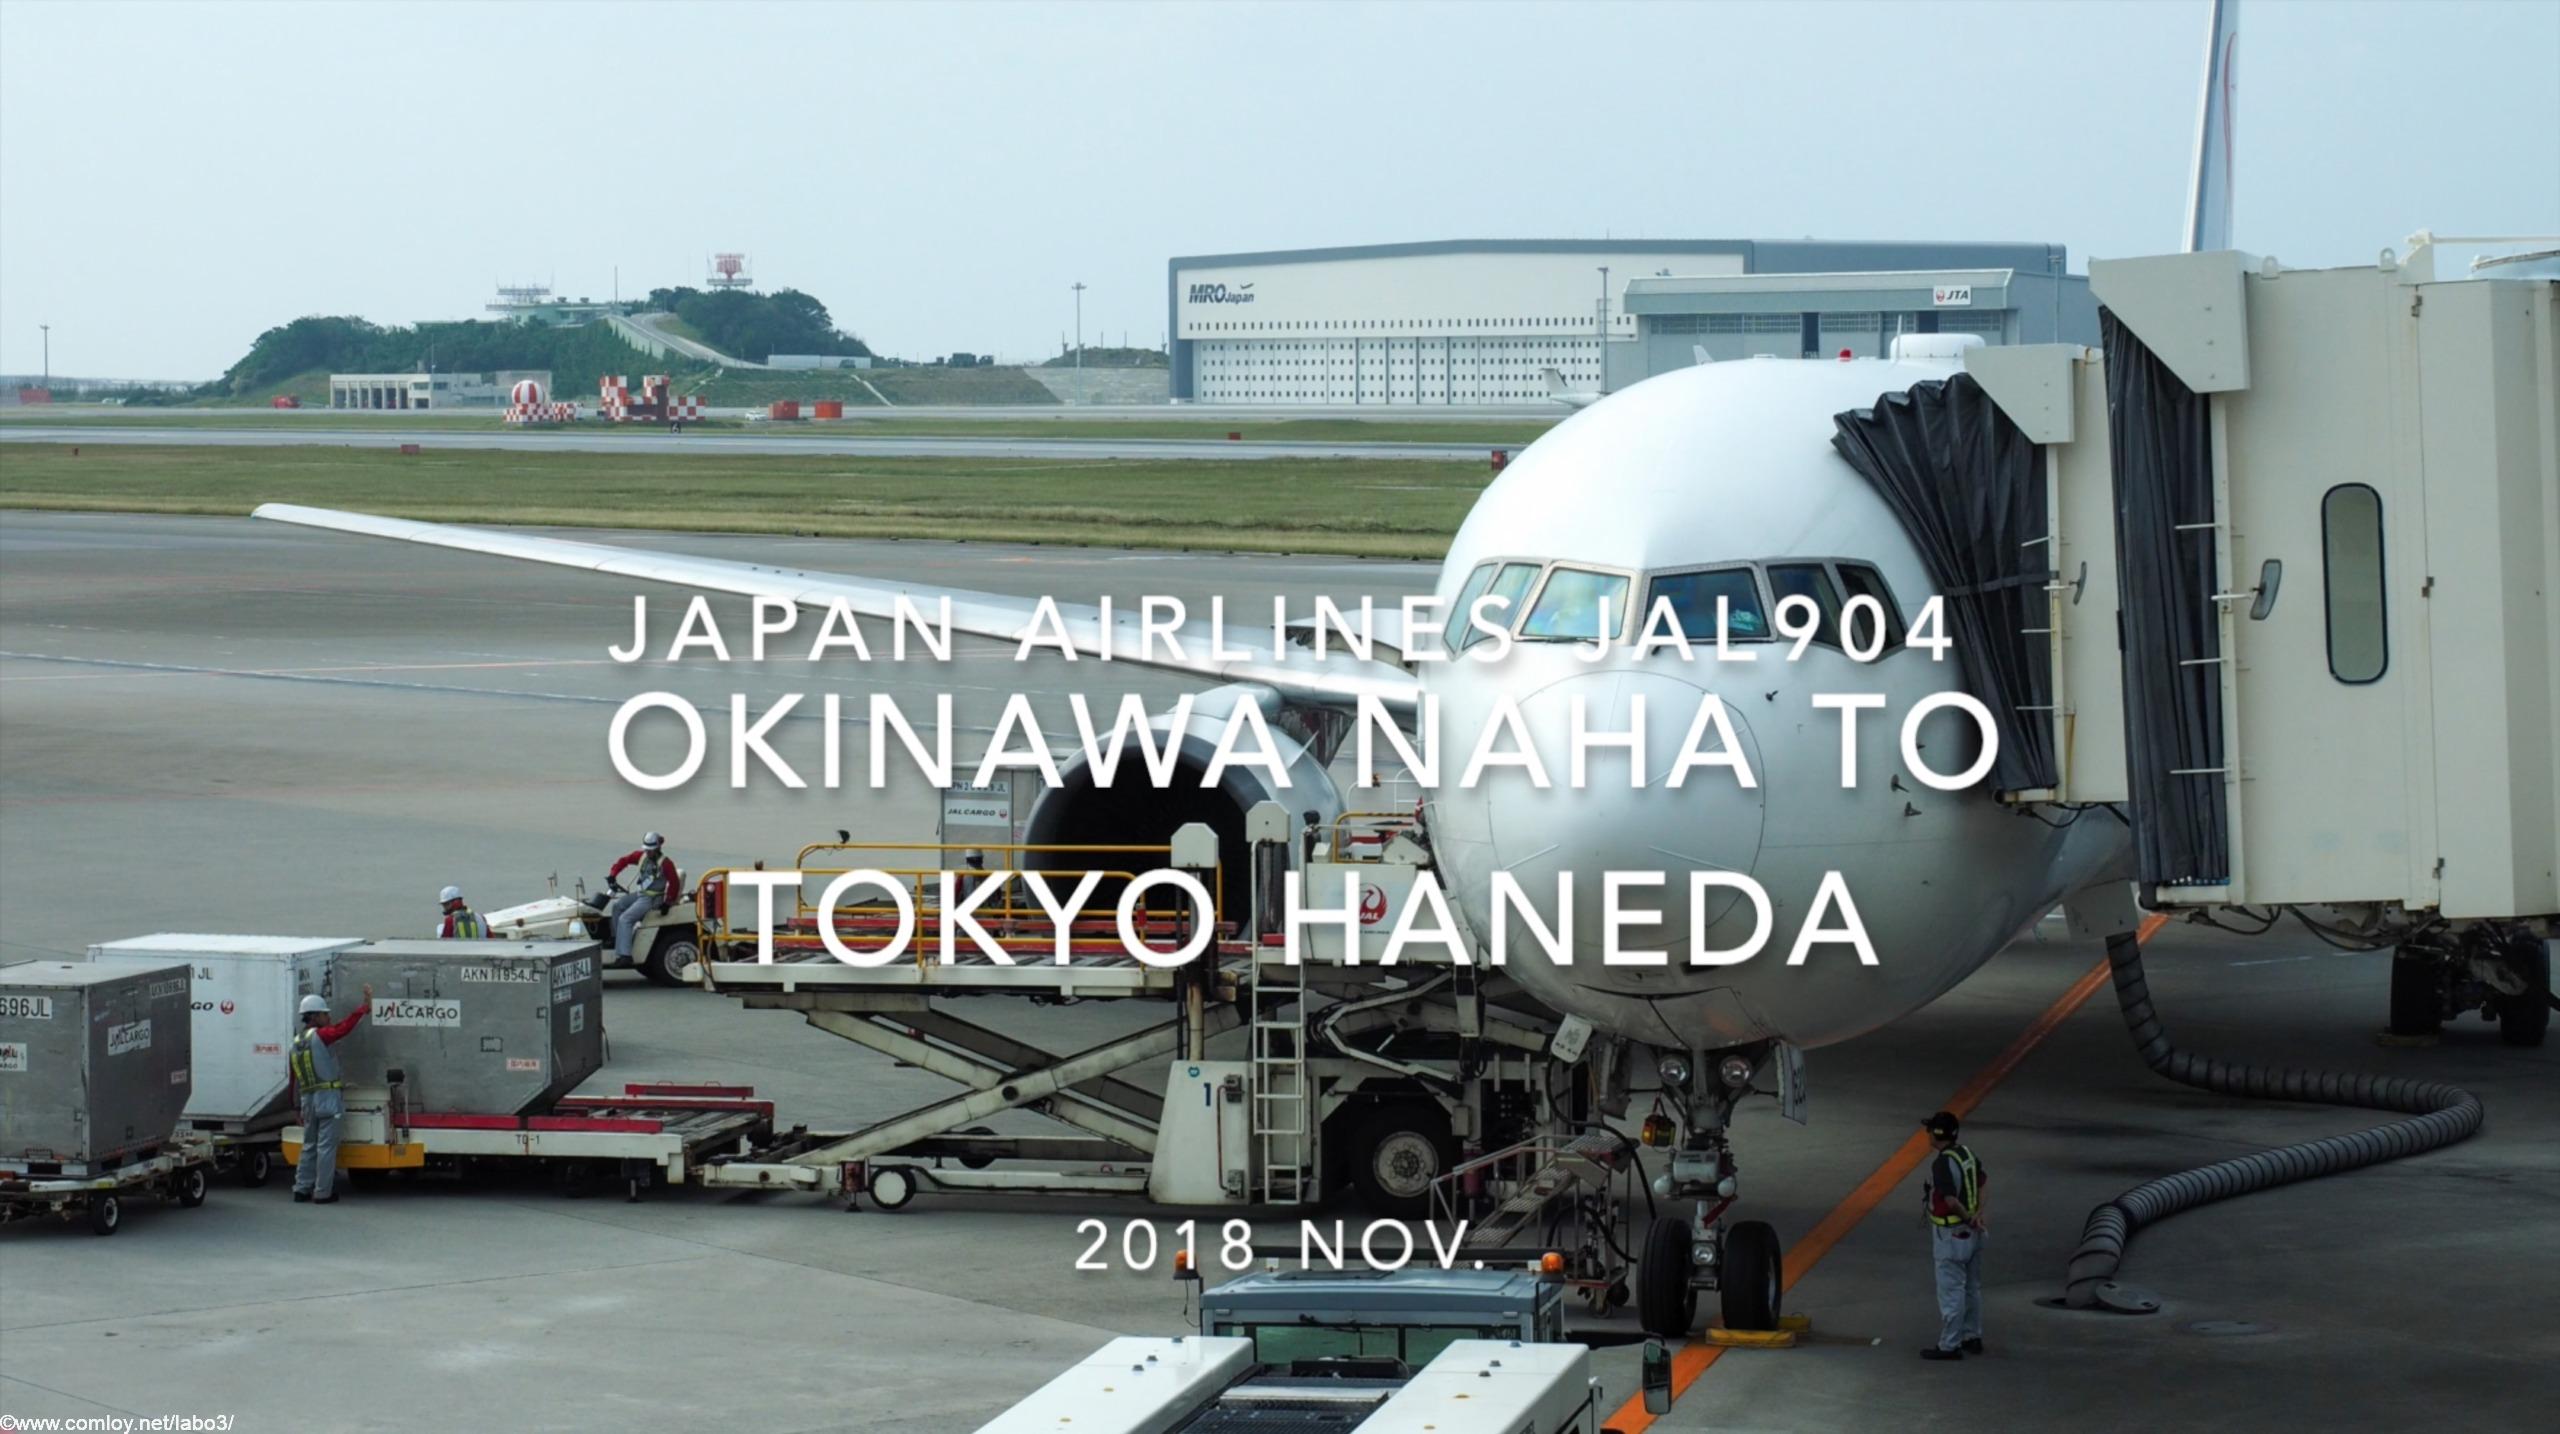 【Flight Report】Japan Airlines JAL904 OKINAWA NAHA to TOKYO HANEDA 2018 NOV 日本航空 那覇 - 羽田 搭乗記